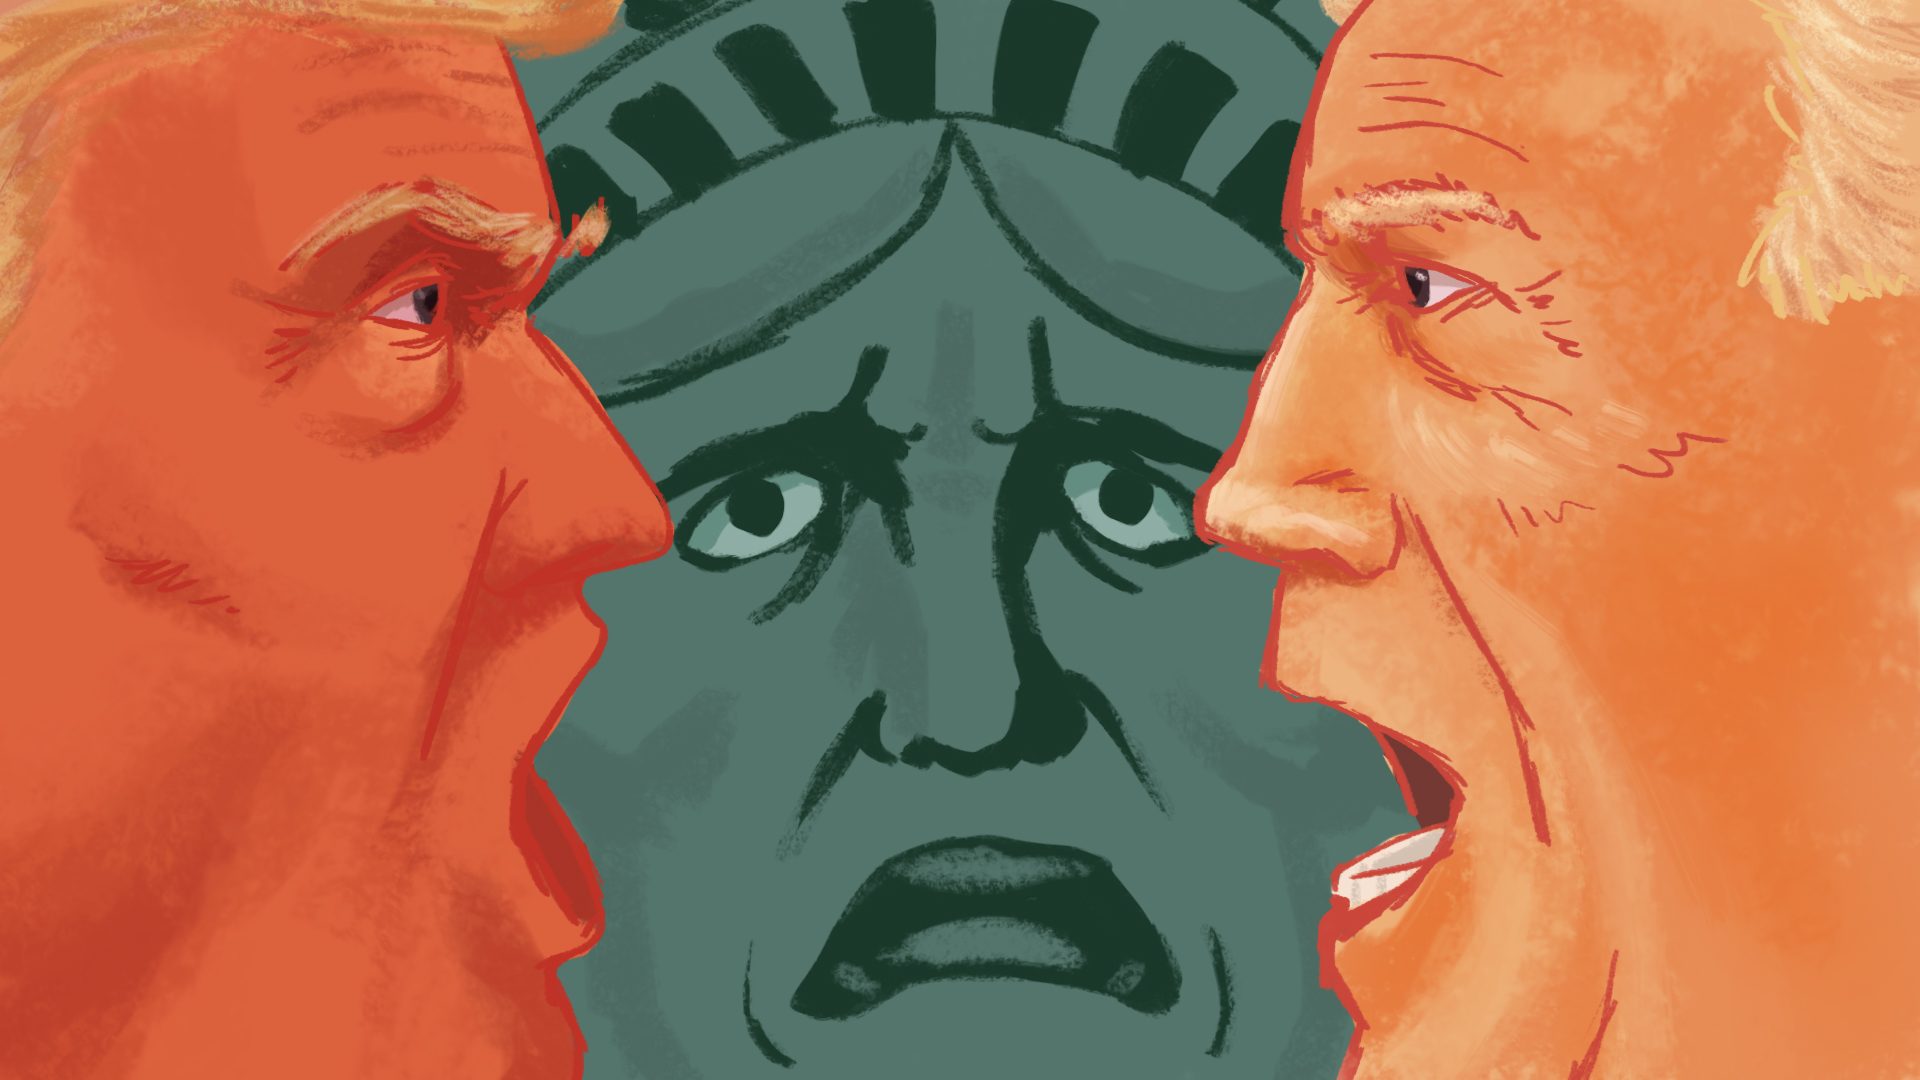 [OPINION] The US presidential debates: Good Grandpa vs Bad Grandpa